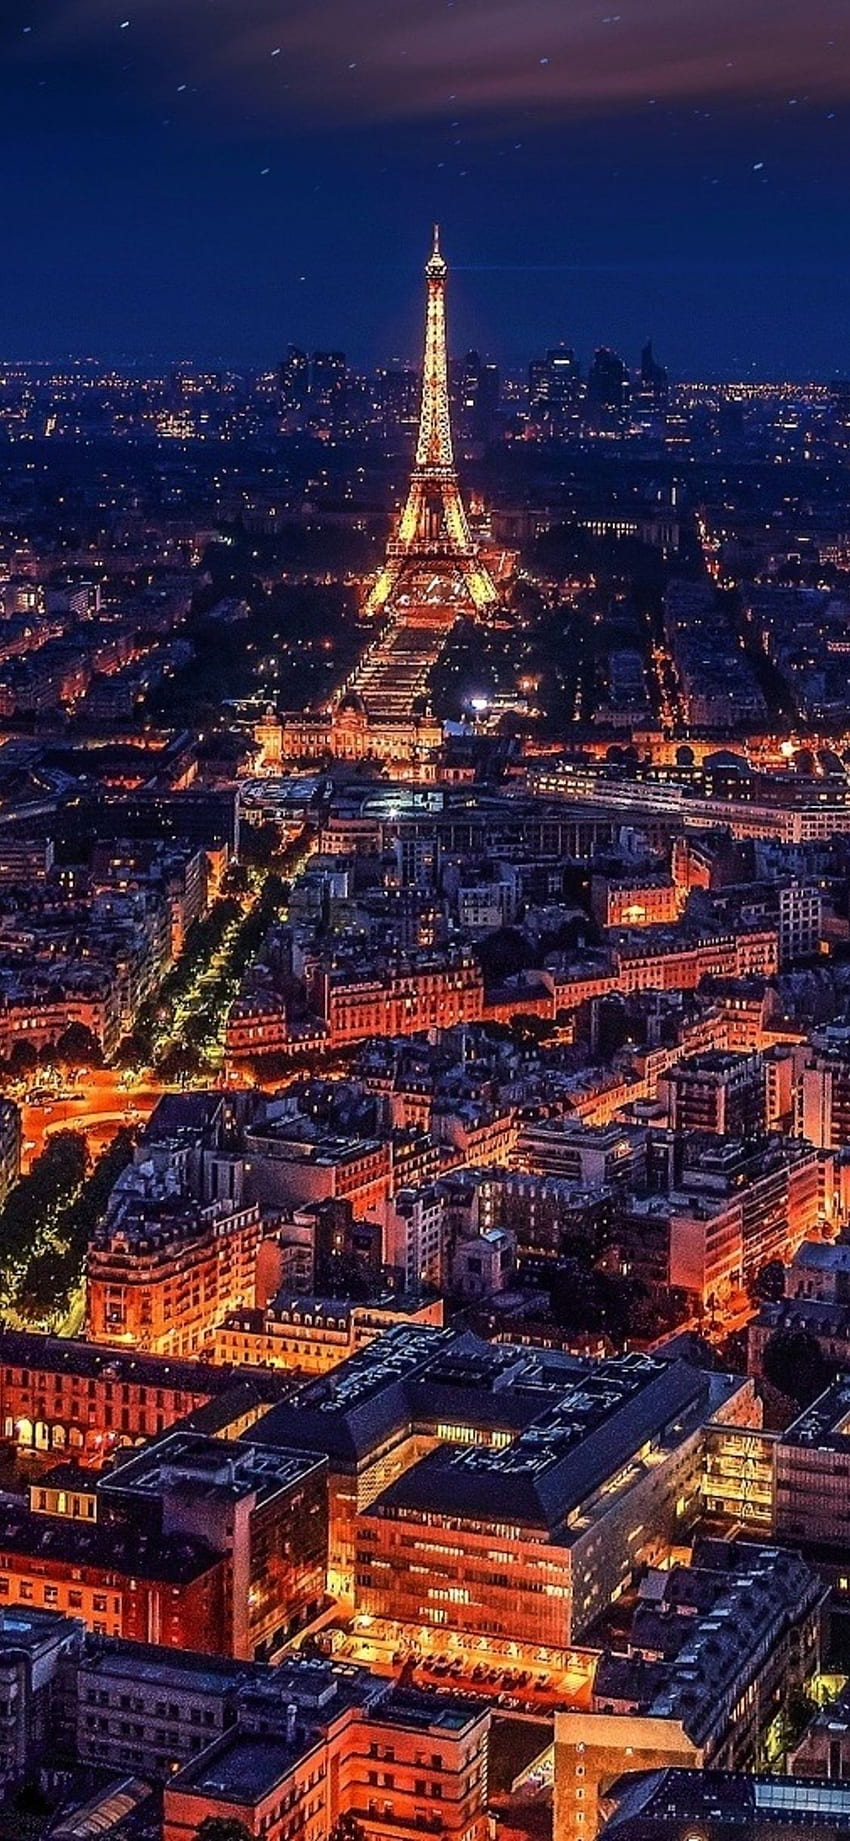 iPhoneXr. 私のサイト。 パリ旅行のヒント, パリ旅行, 美しい場所, ディズニーランド パリ HD電話の壁紙